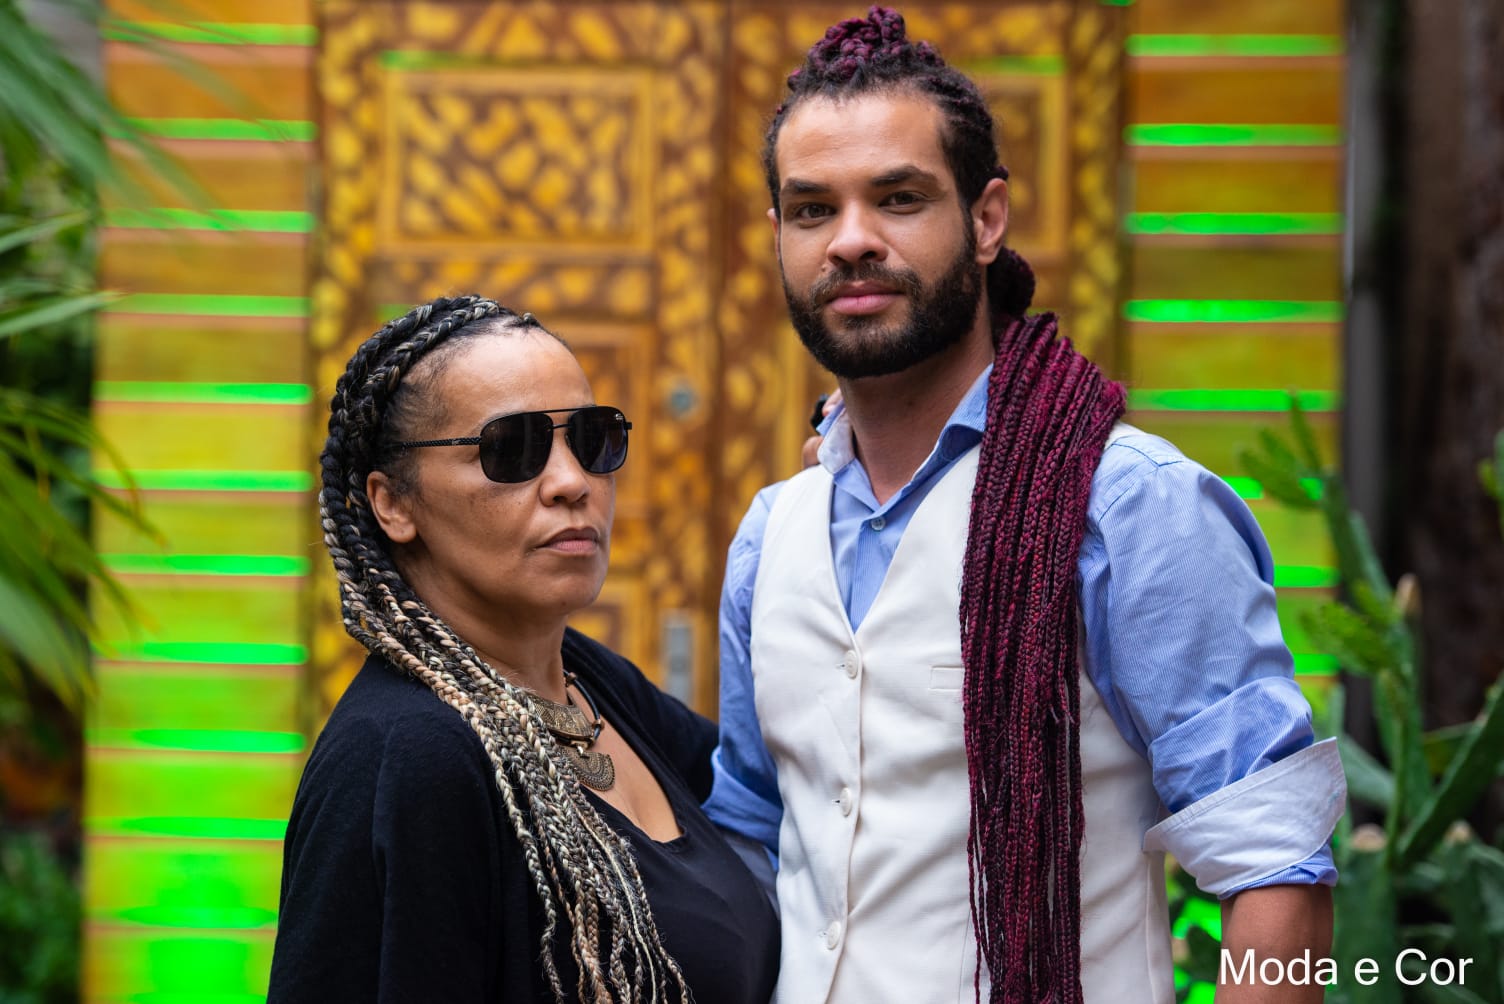 Projeto dá visibilidade a marcas de afro criadores gaúchos